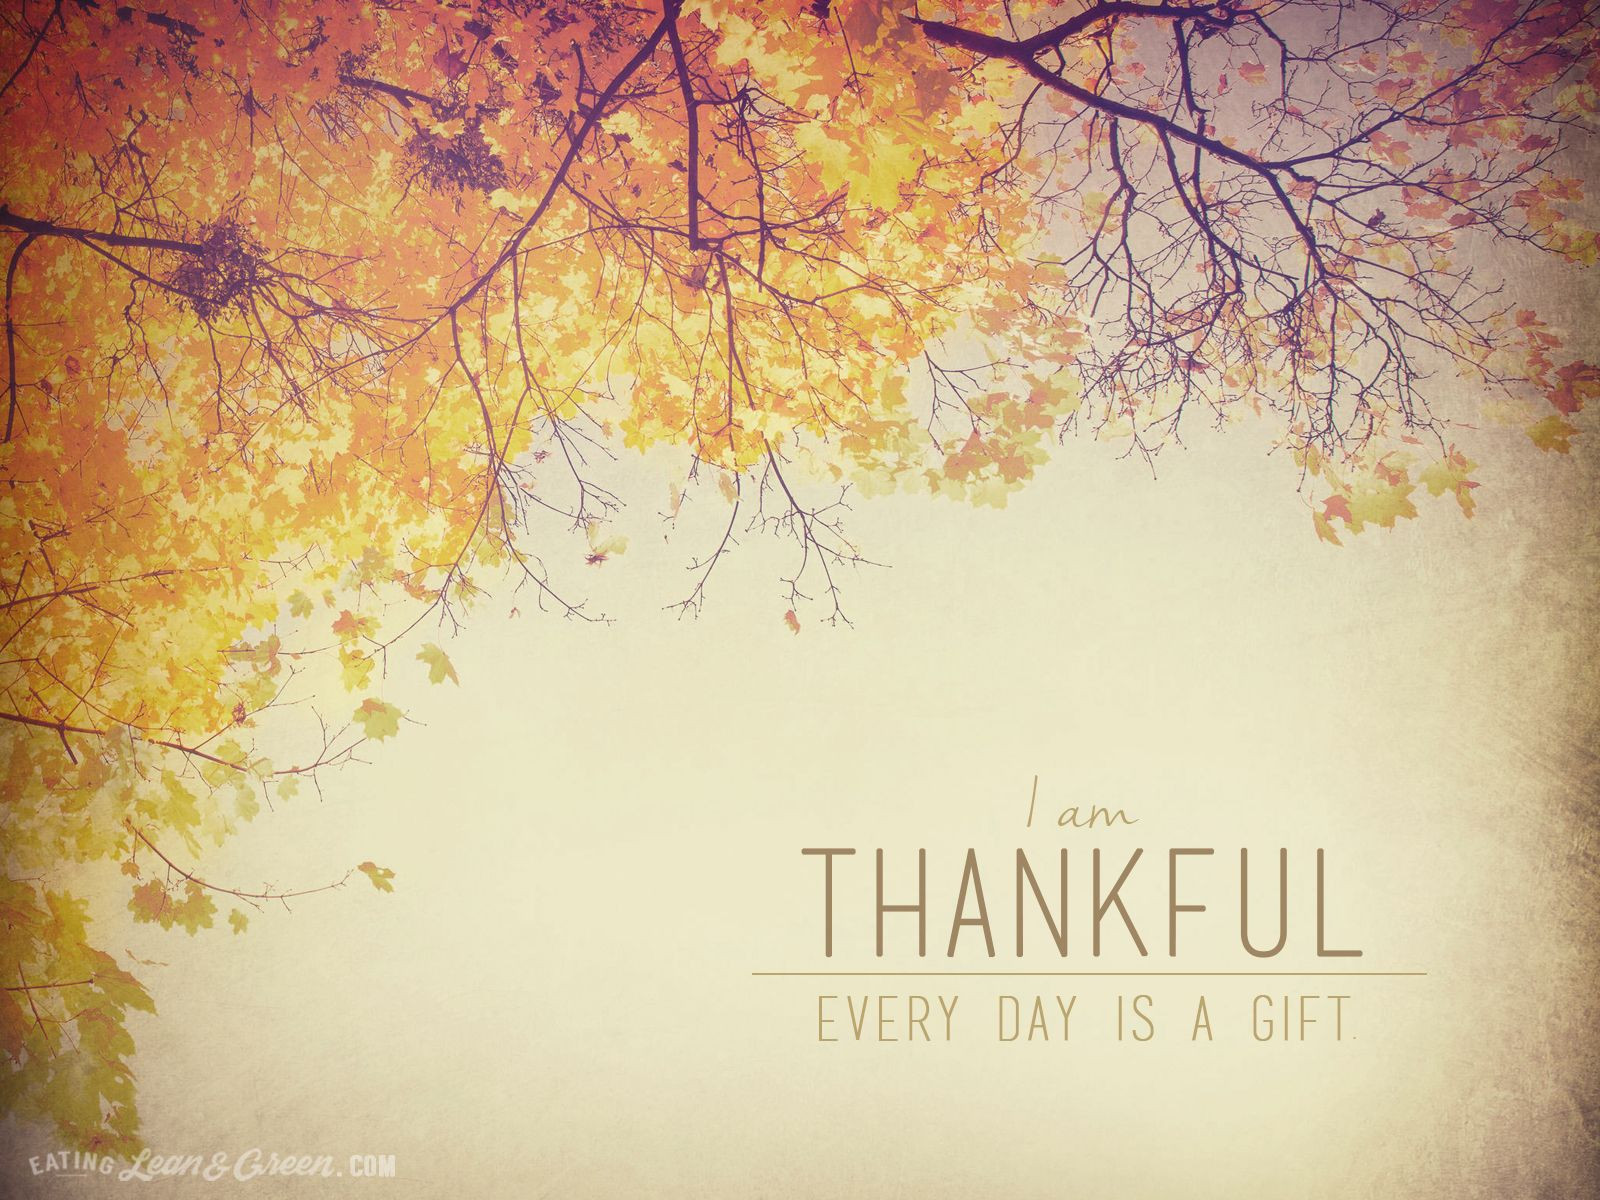 Thanksgiving Quotes Vsco
 "Thankful" Desktop Wallpaper Freebie